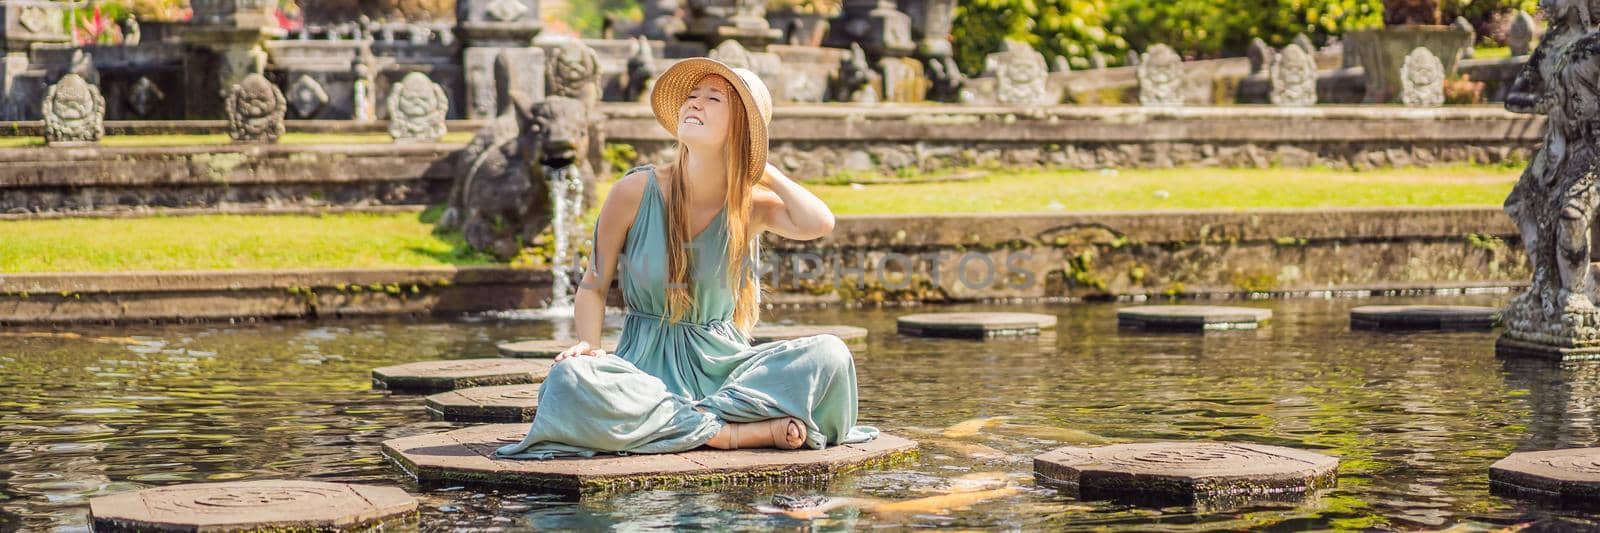 Young woman tourist in Taman Tirtagangga, Water palace, Water park, Bali Indonesia BANNER, LONG FORMAT by galitskaya